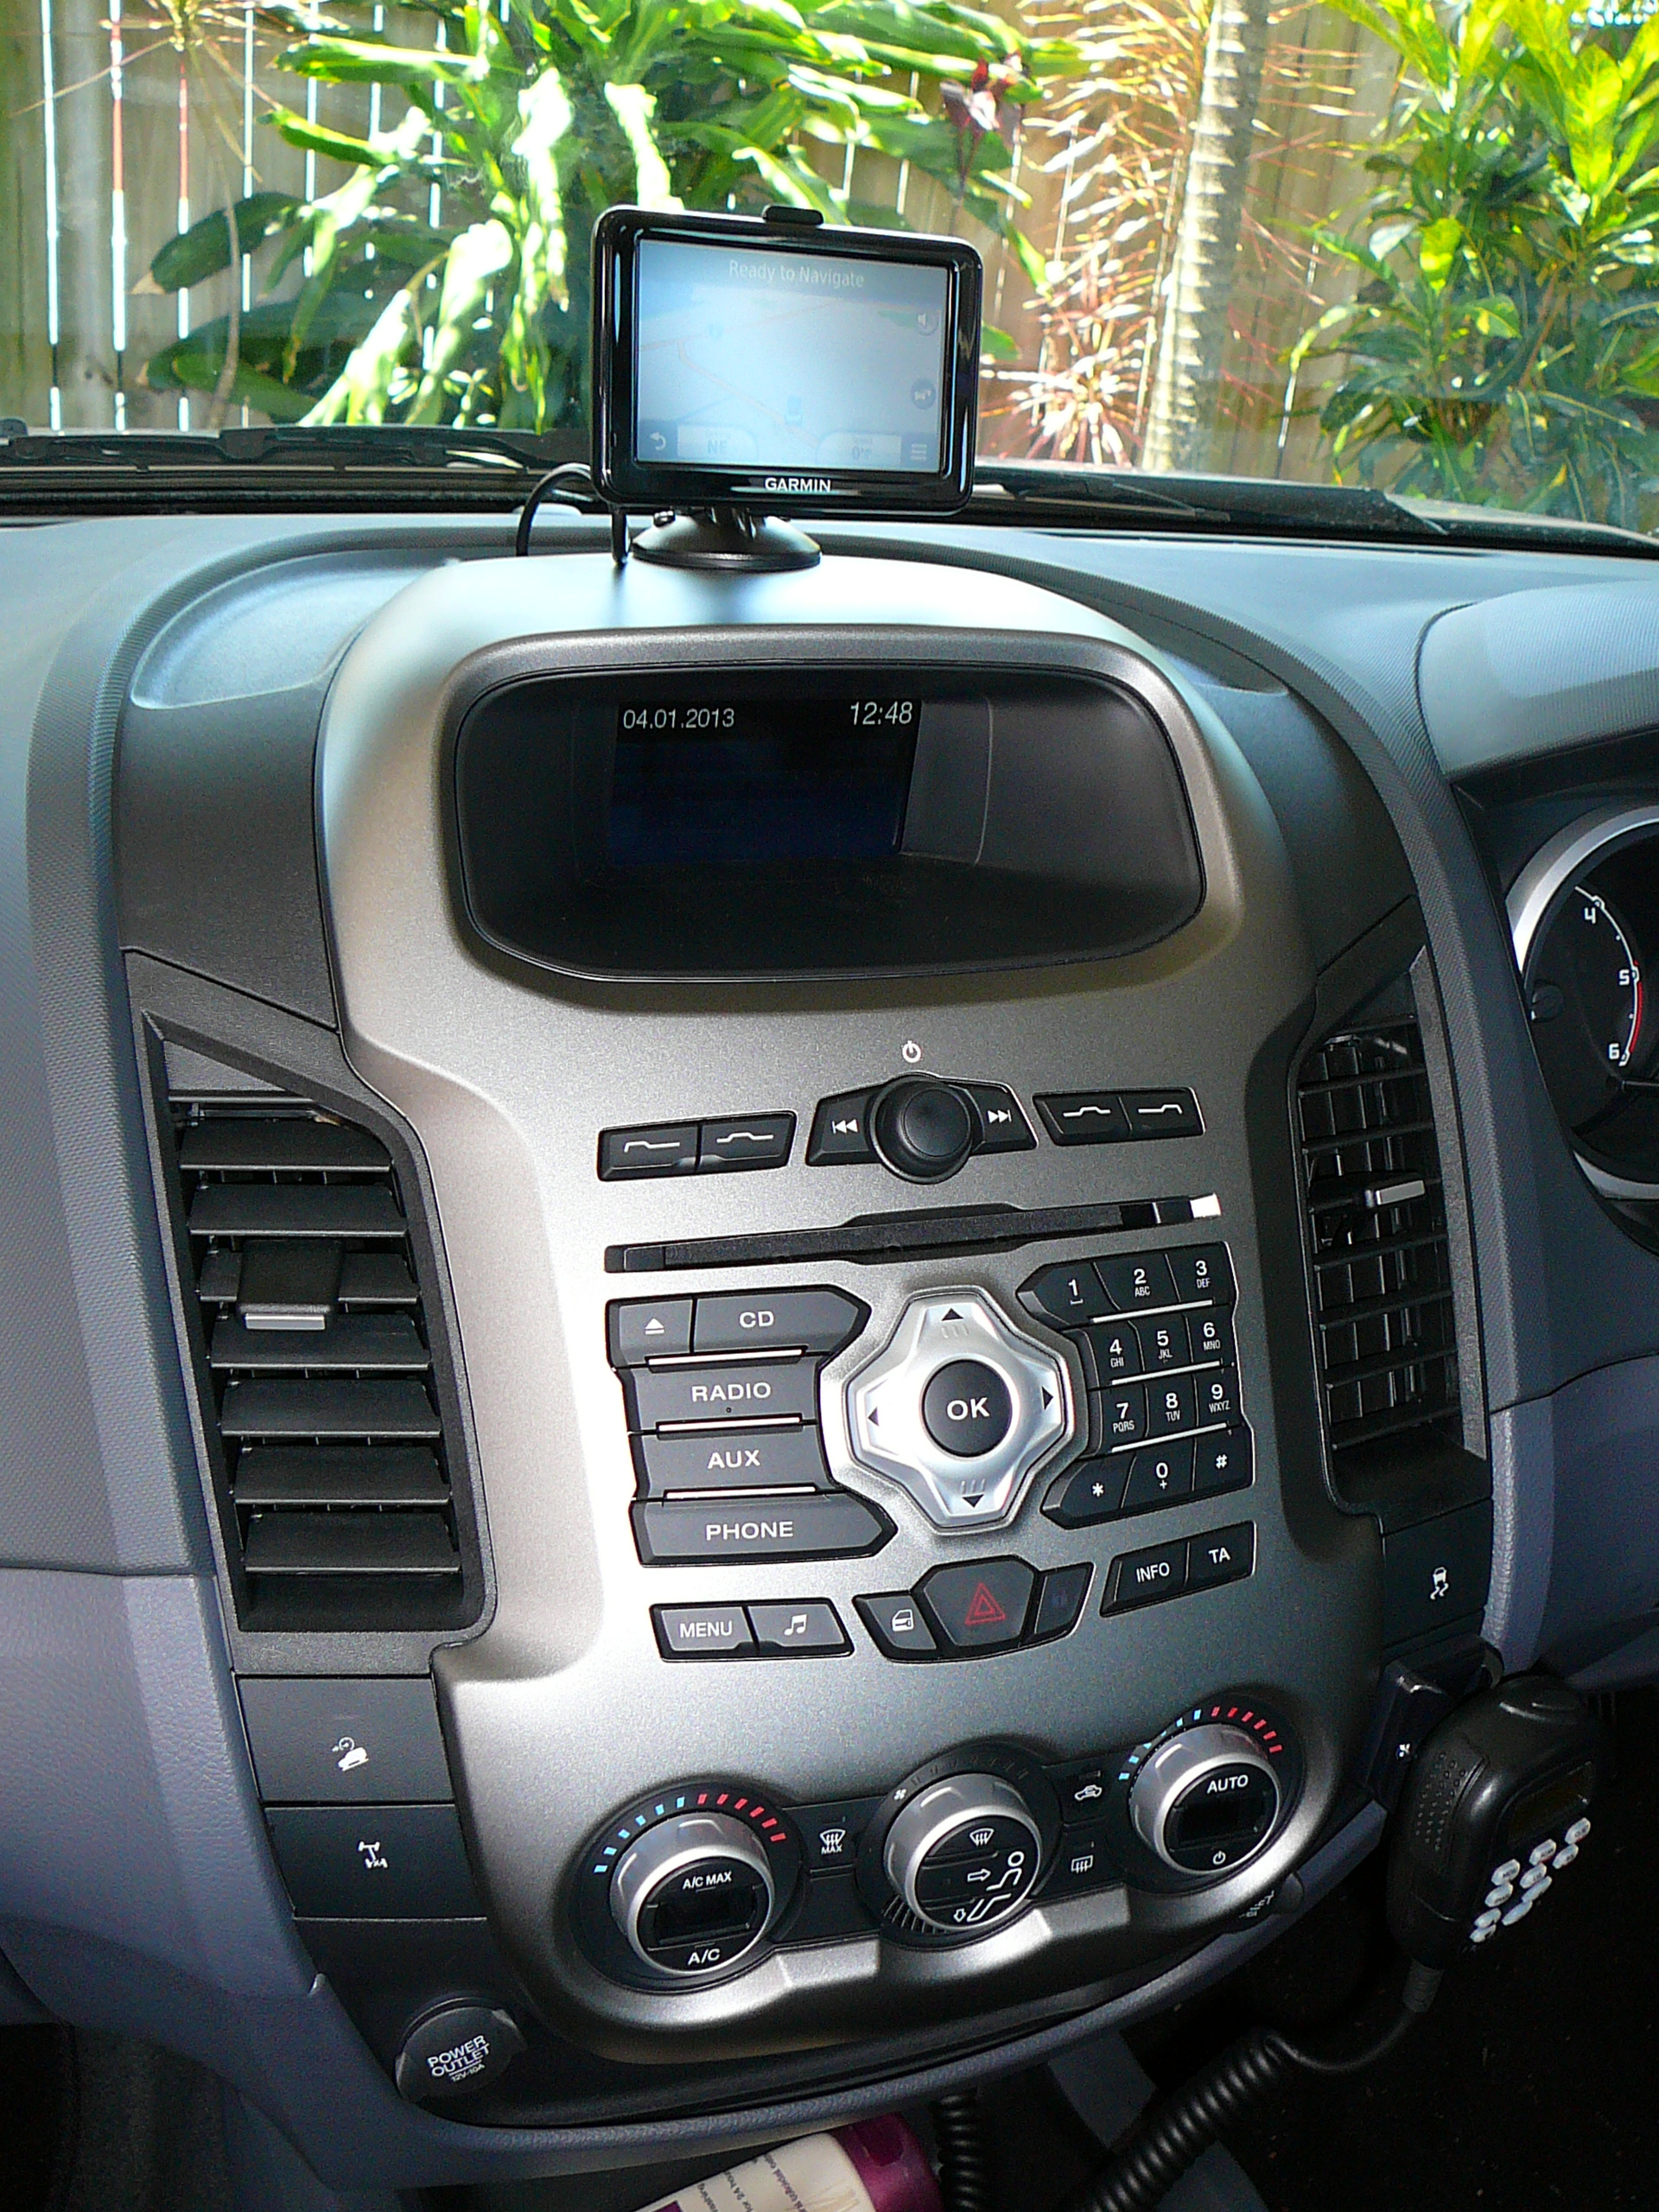 Ford Ranger 2013, Portable GPS Navigation System Installation